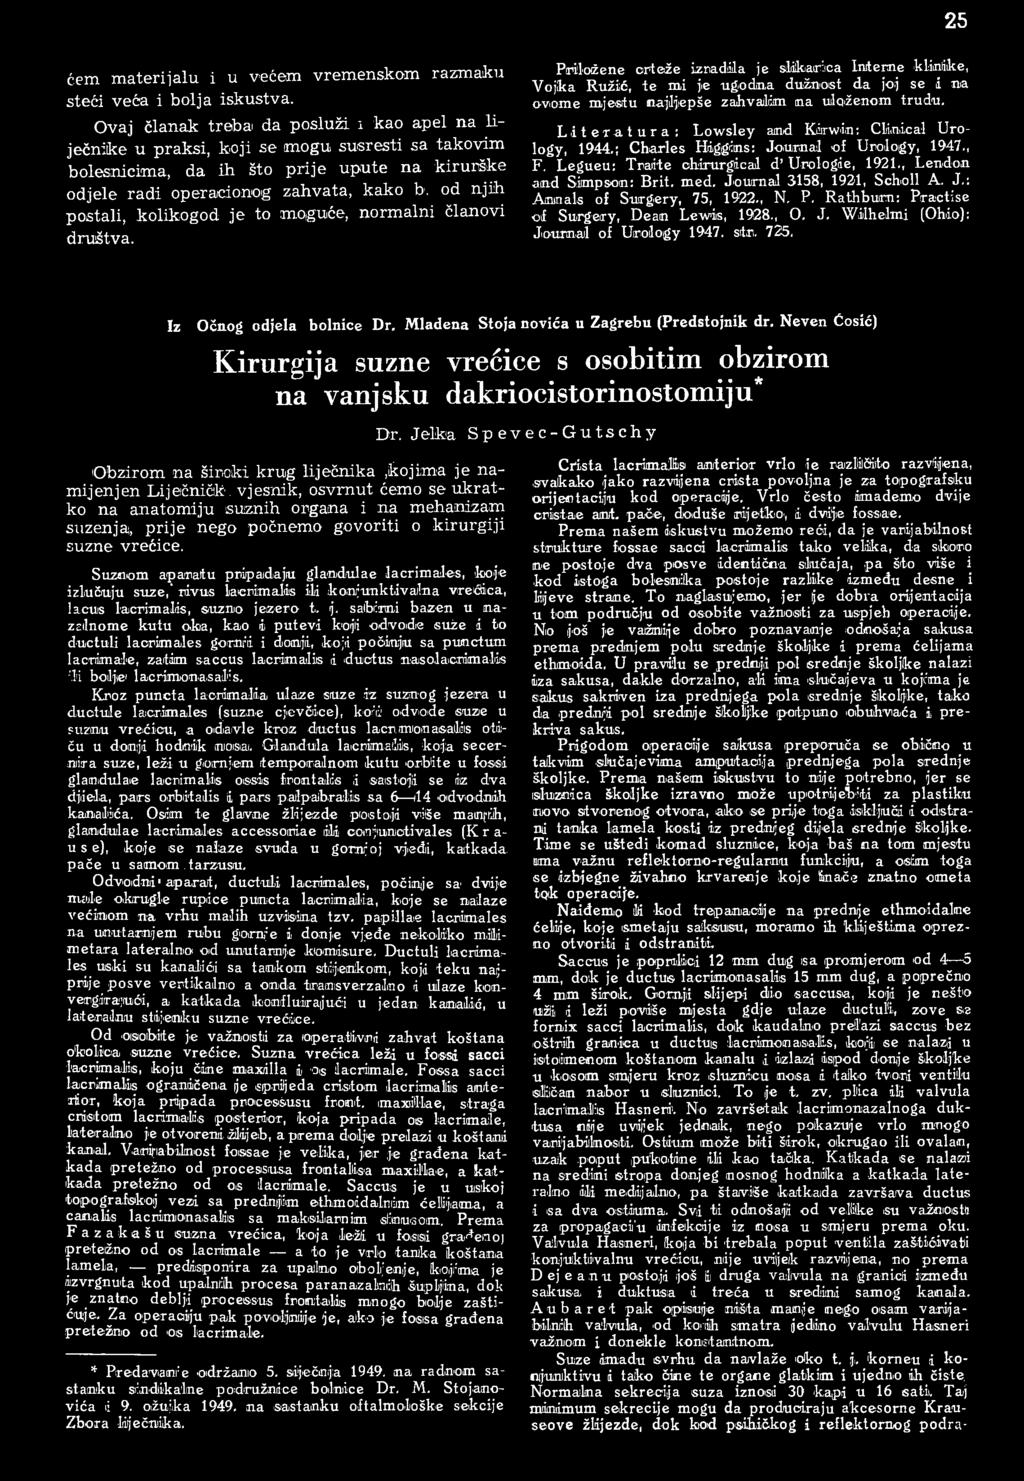 Literatura: Lowsley and Kiiirwin: Clinical Urology, 1944.; Charles Higgins: Journal of Urology, 1947., F. Legueu: Traite chirurgical d Urologie, 1921., Lendon and Simpson: Brit. med.